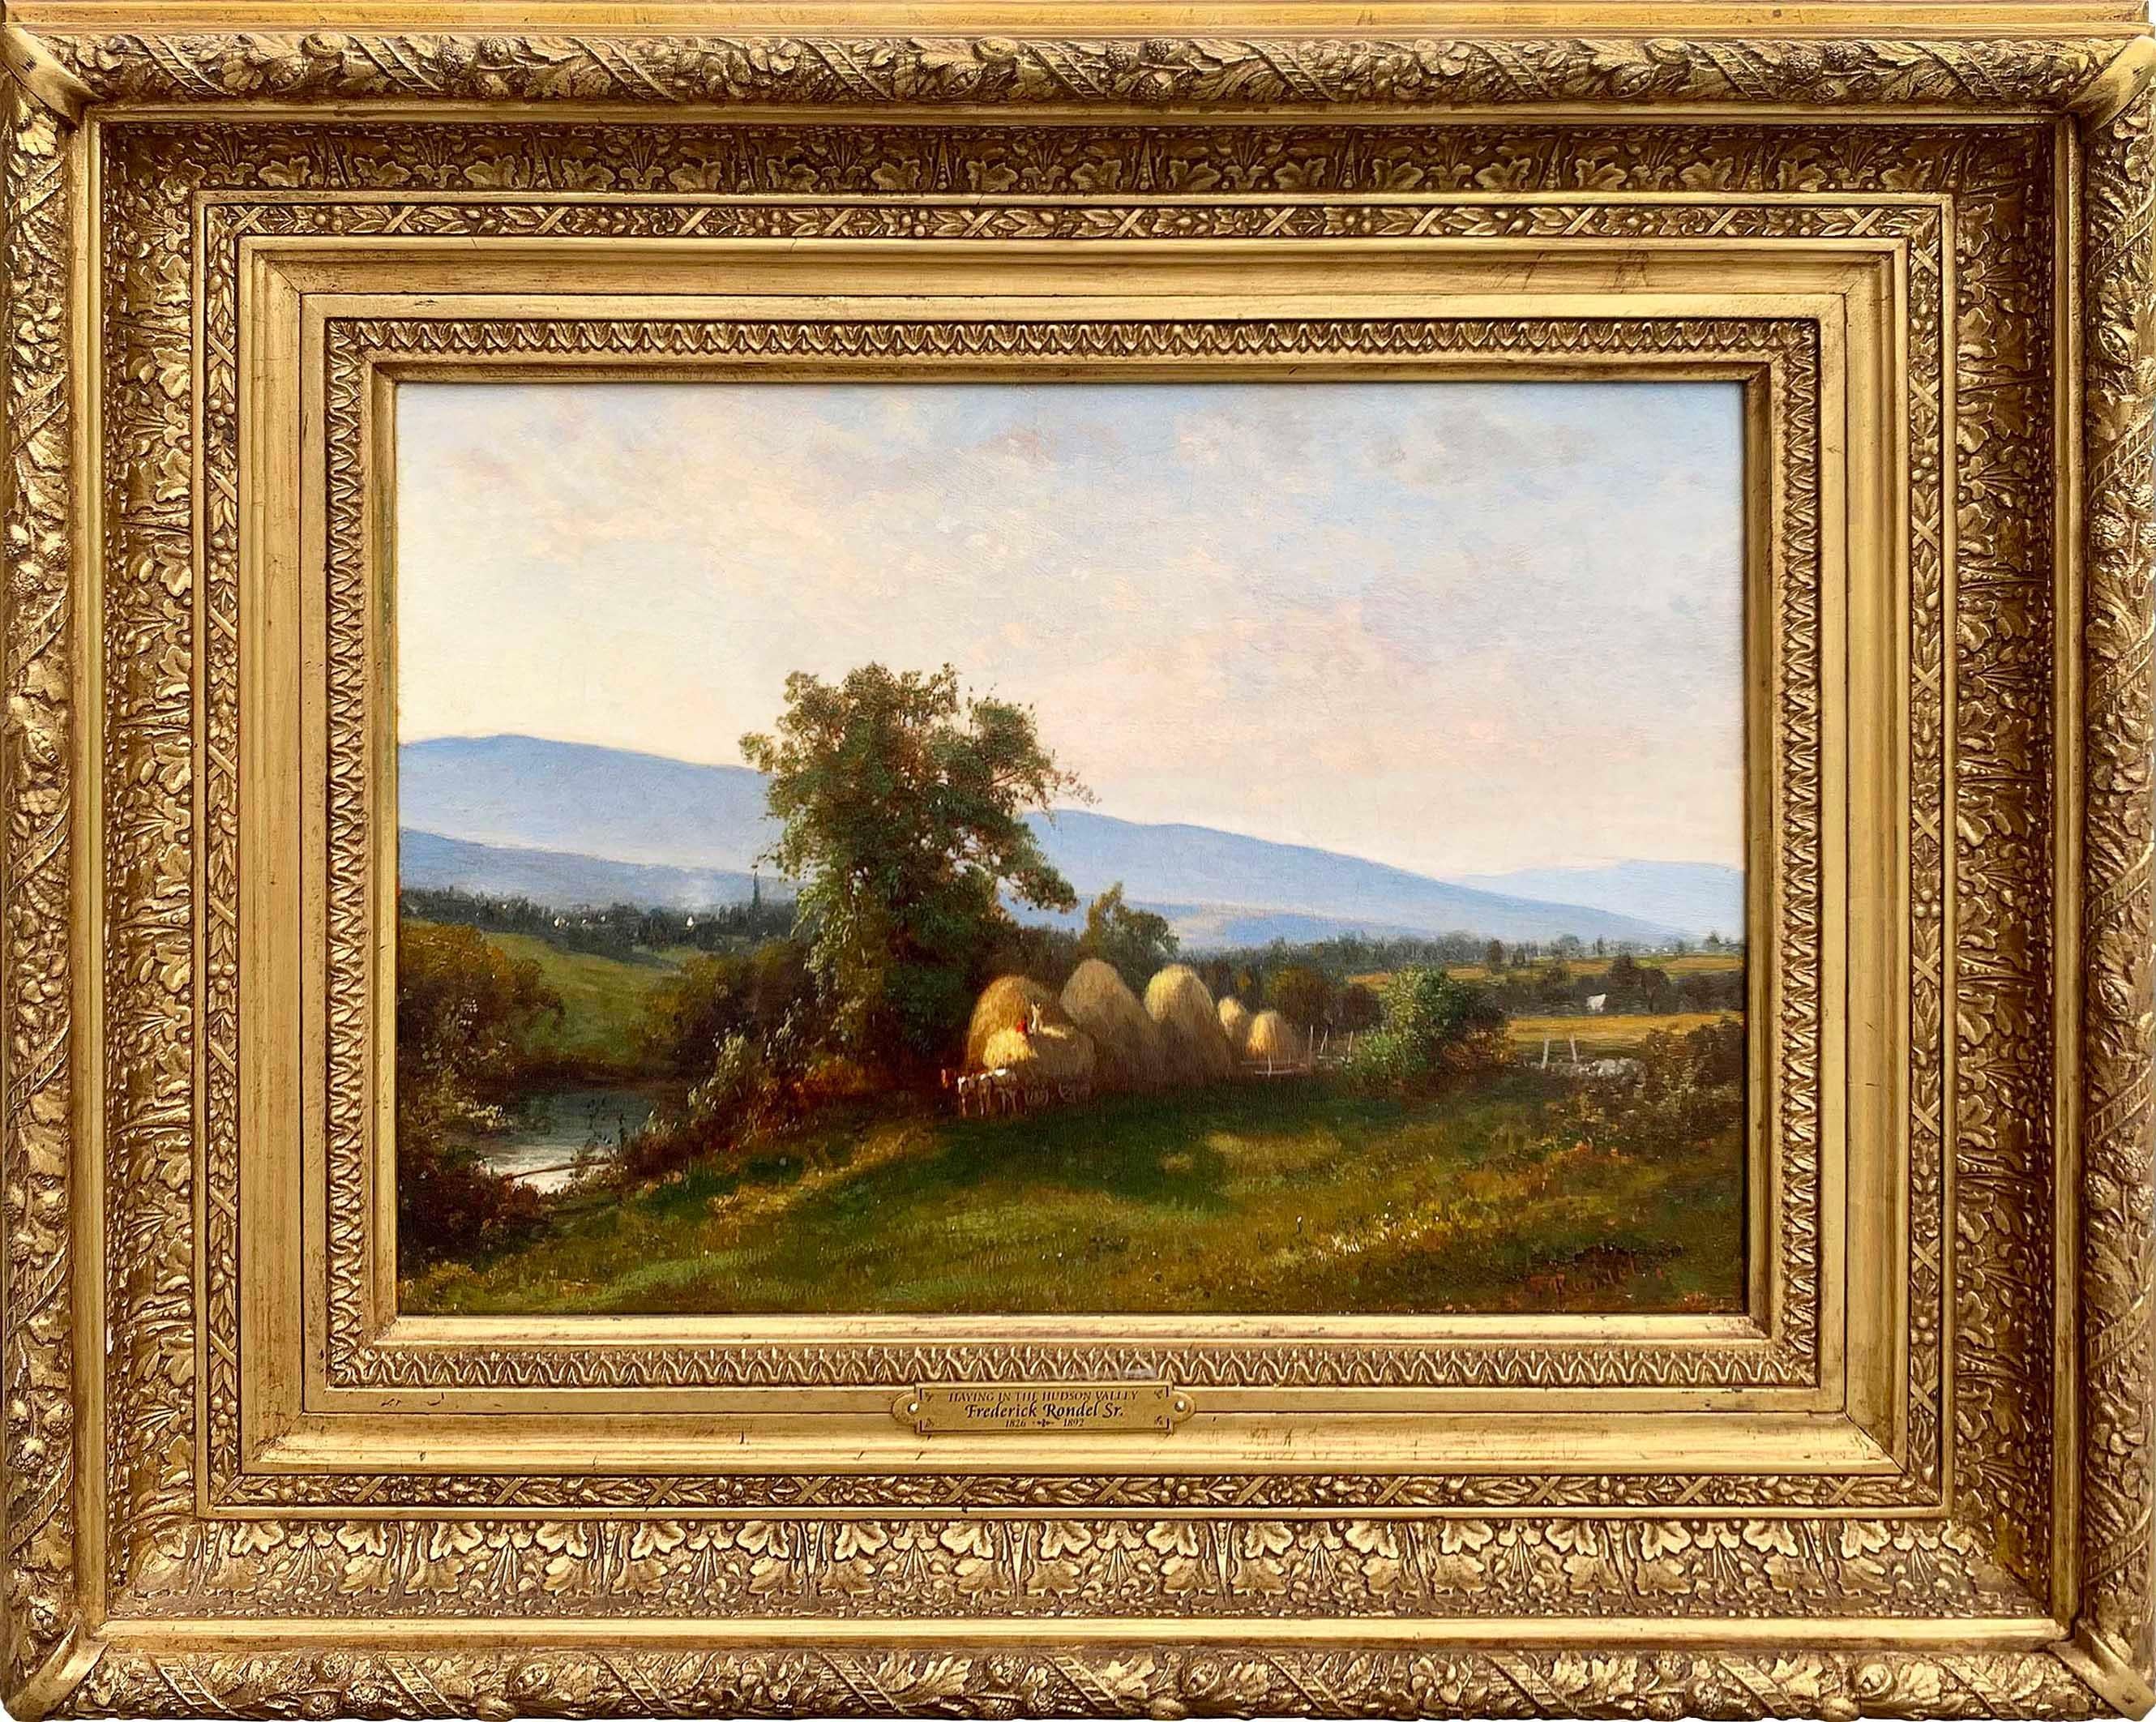 Haying im Hudson River Valley von Frederick Rondel, Sr. (Amerikaner, 1826-1892)